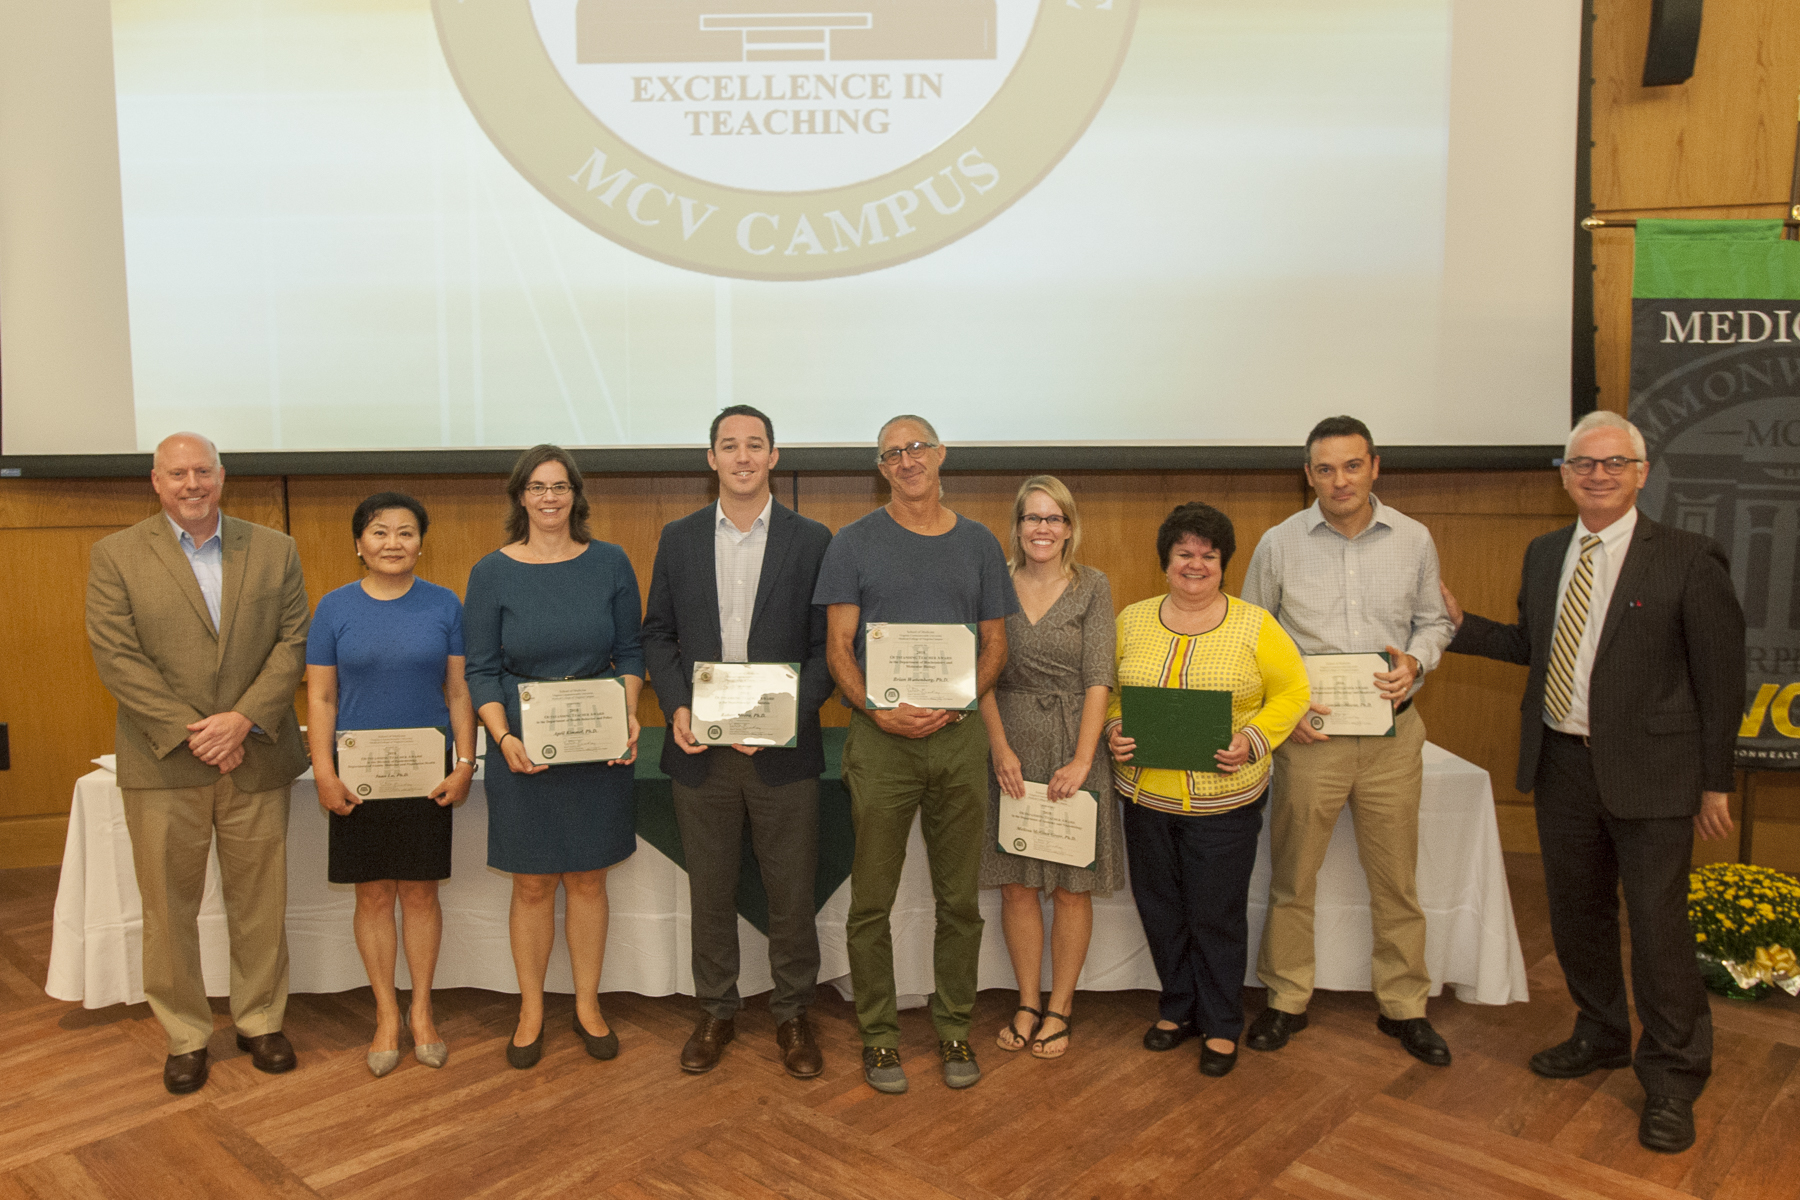  Faculty Excellence Awards 2018 